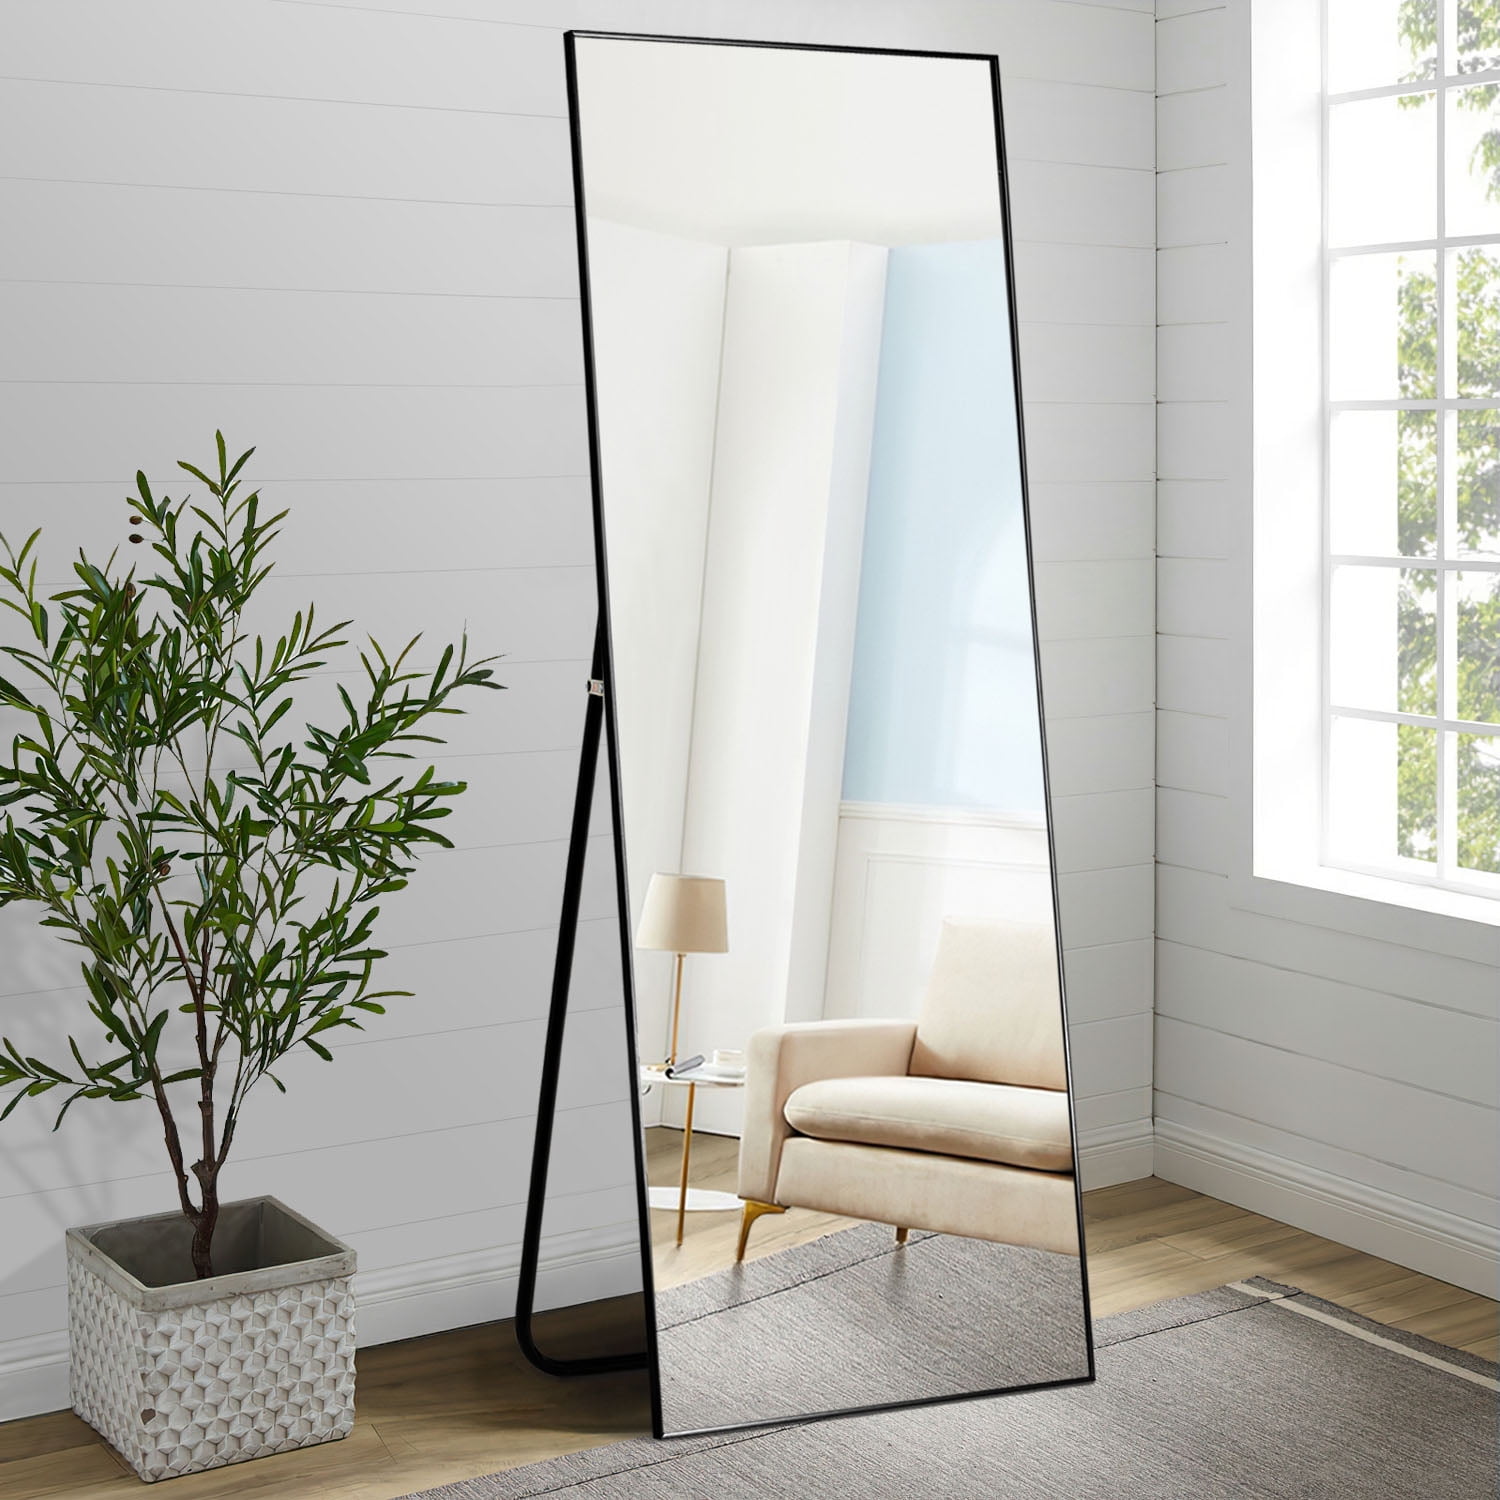 Neutype Full Length Mirror Dressing Mirror 65x22 Large Rectangle Bedroom Floor Standing Mirror